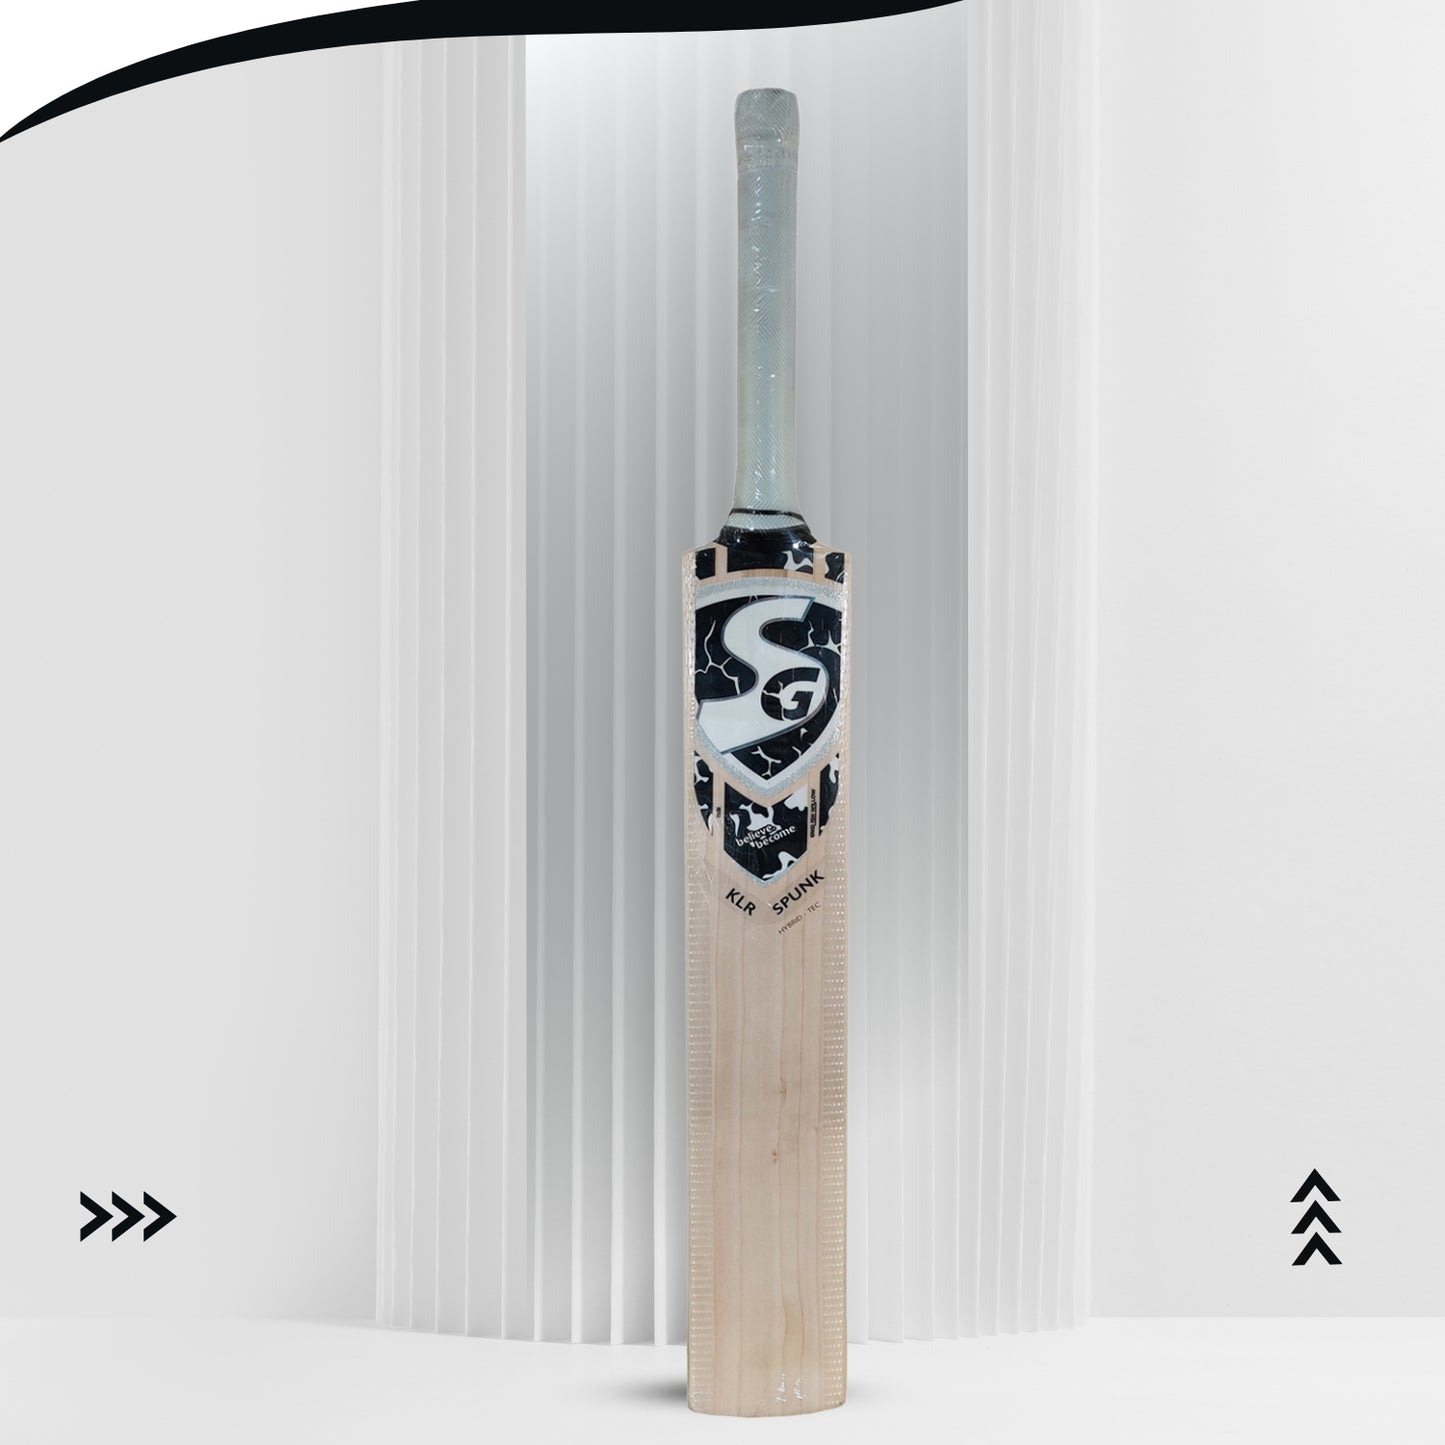 SG KLR SPUNK Hybrid-Tec English Willow Cricket Bat - Best Price online Prokicksports.com